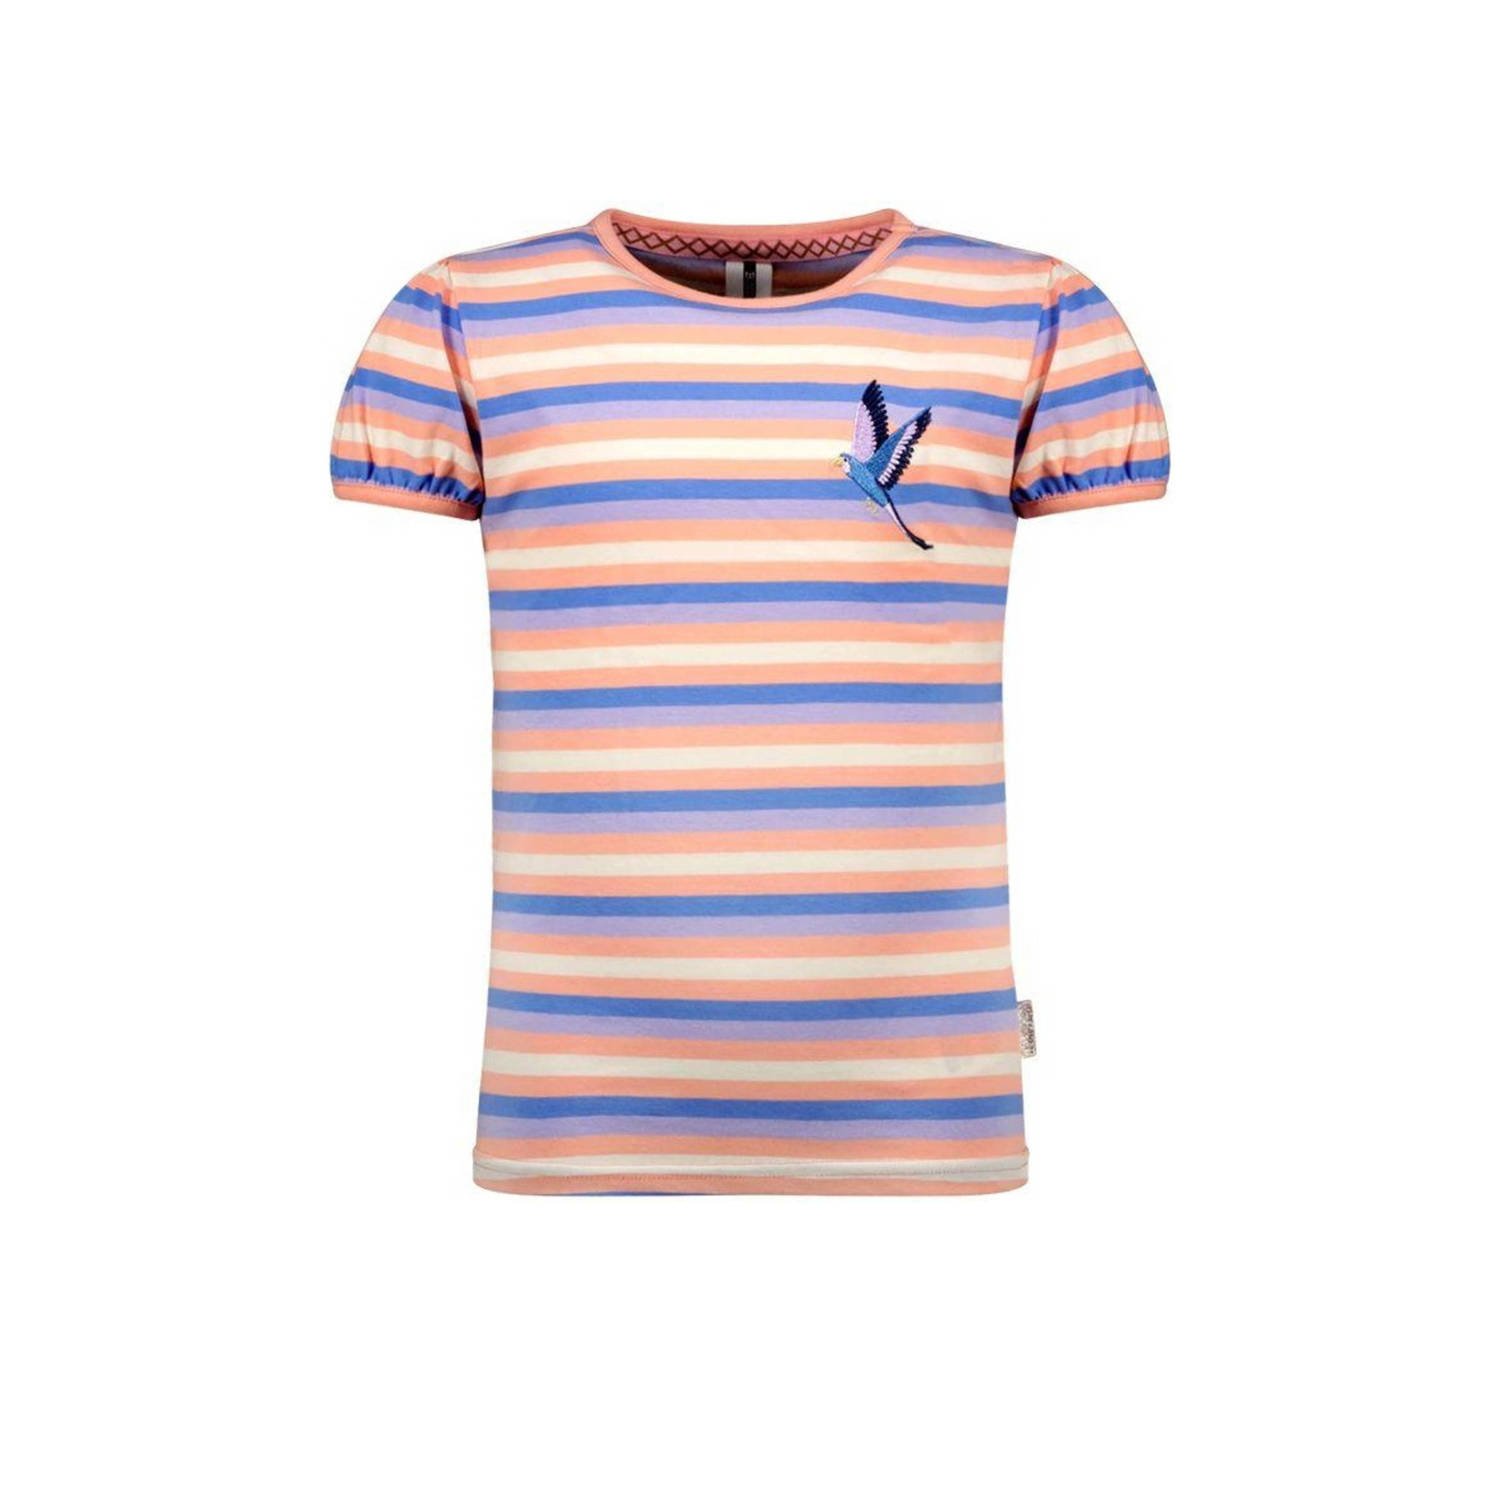 B.Nosy gestreept T-shirt Phebe roze blauw wit Meisjes Stretchkatoen Ronde hals 122 128